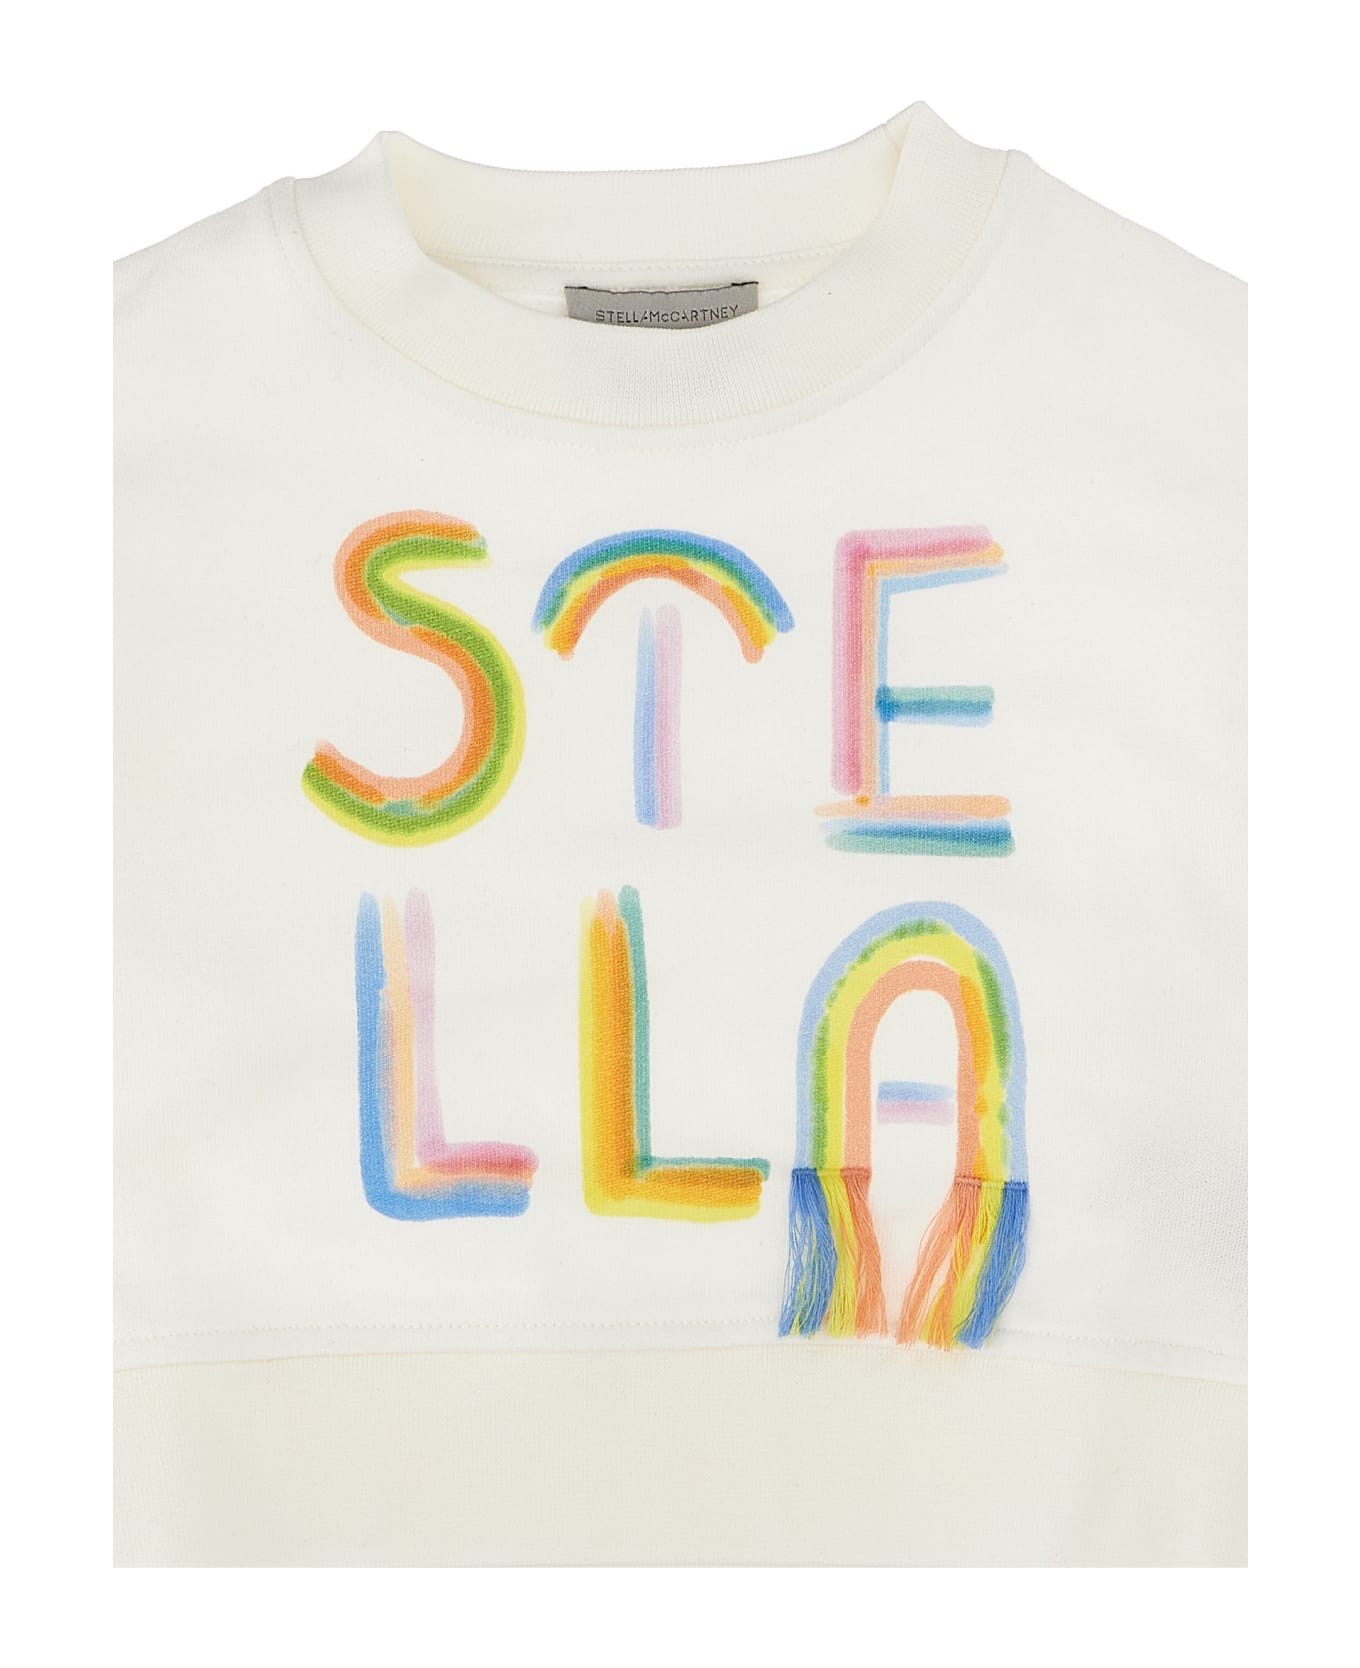 Stella McCartney Kids 'stella Rainbow' Sweatshirt - White